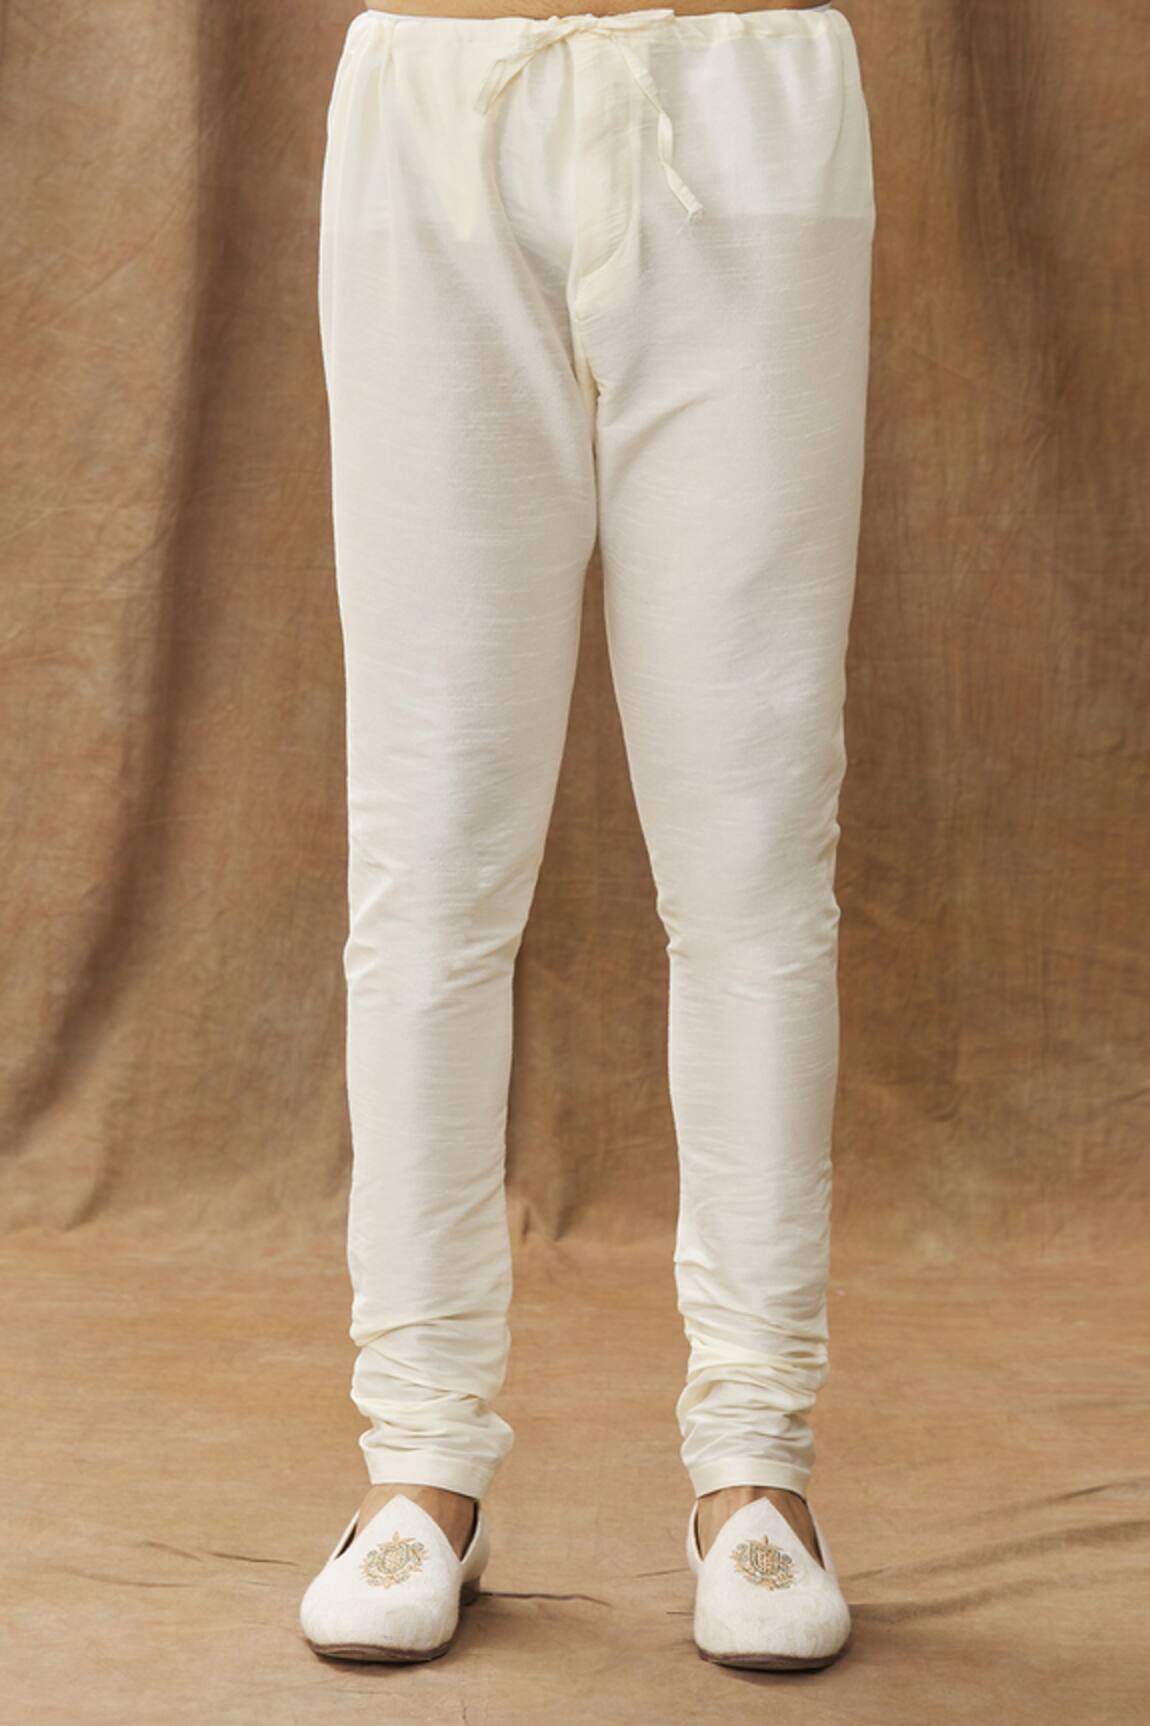 Patiala pattern Pant model Bottom for Kameez India Pants Pure Cotton White